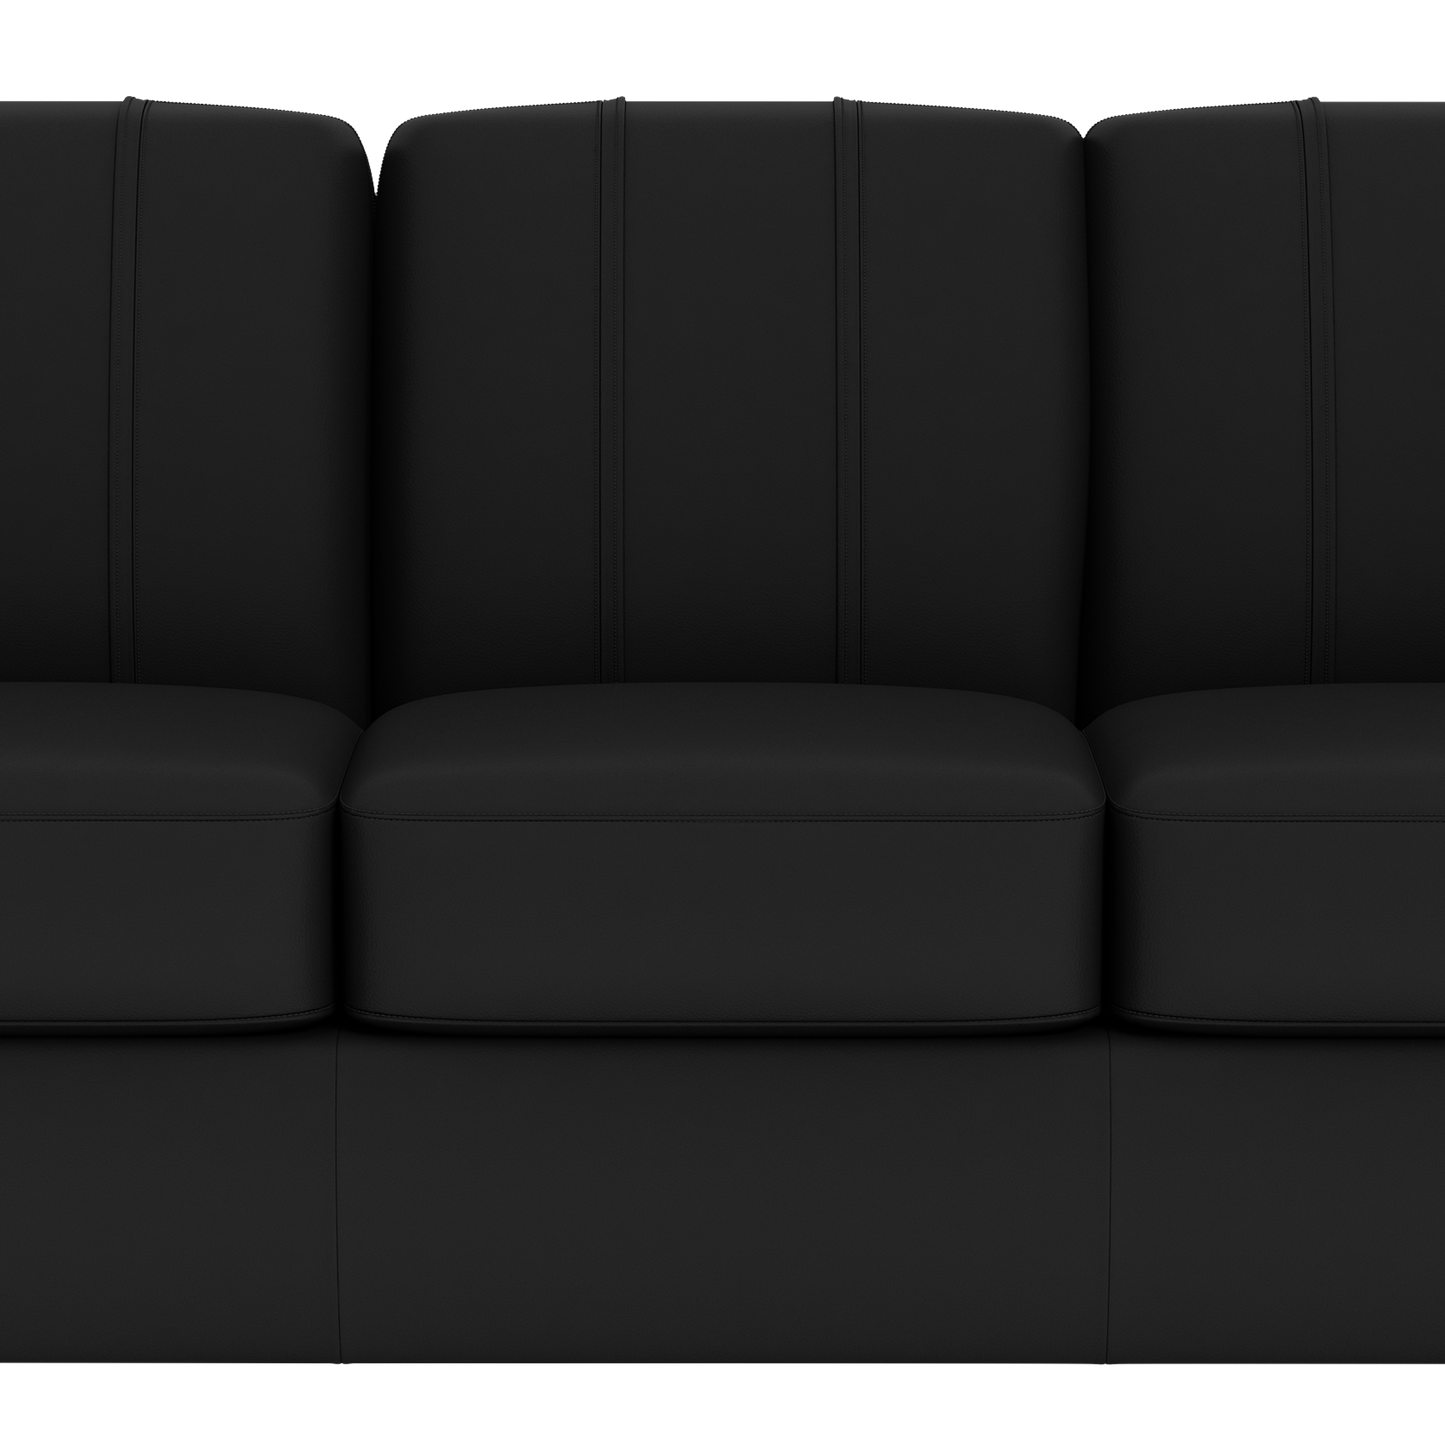 Chesapeake Stationary Sofa - Synthetic Leather (Blank or Stock Logo)